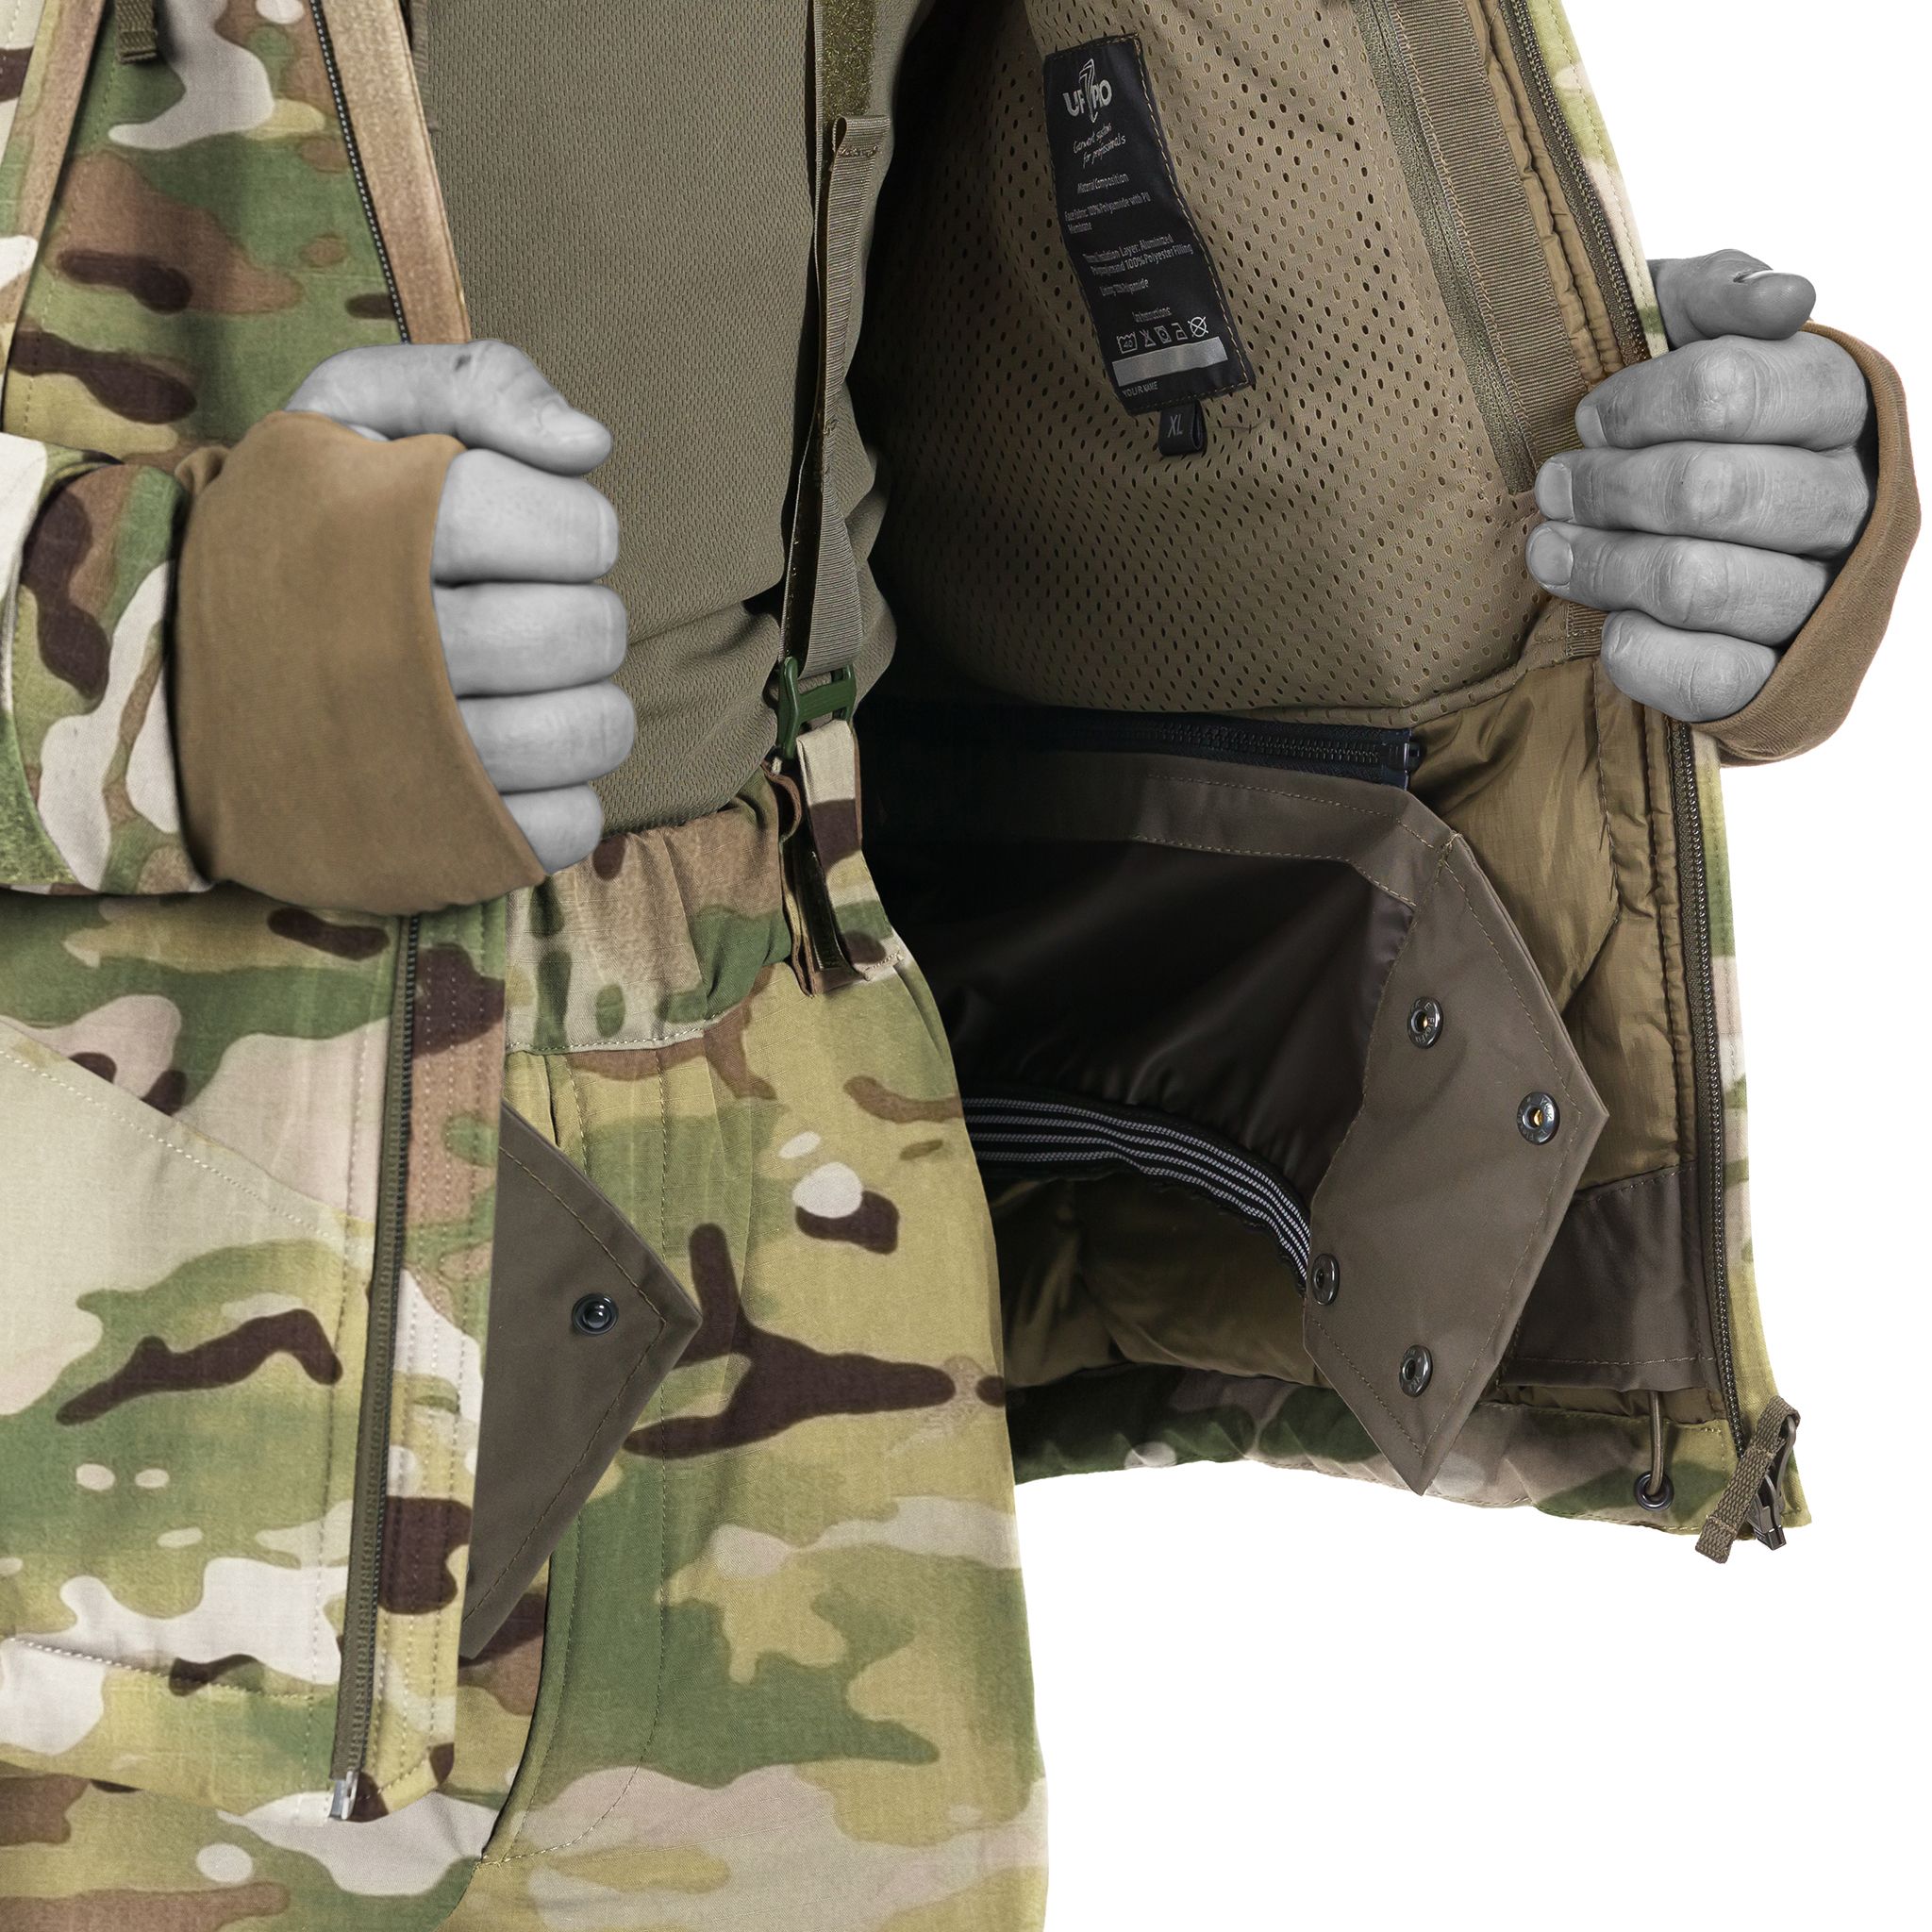 UF PRO - Delta OL 4.0 Tactical Winter Jacket - Multicam